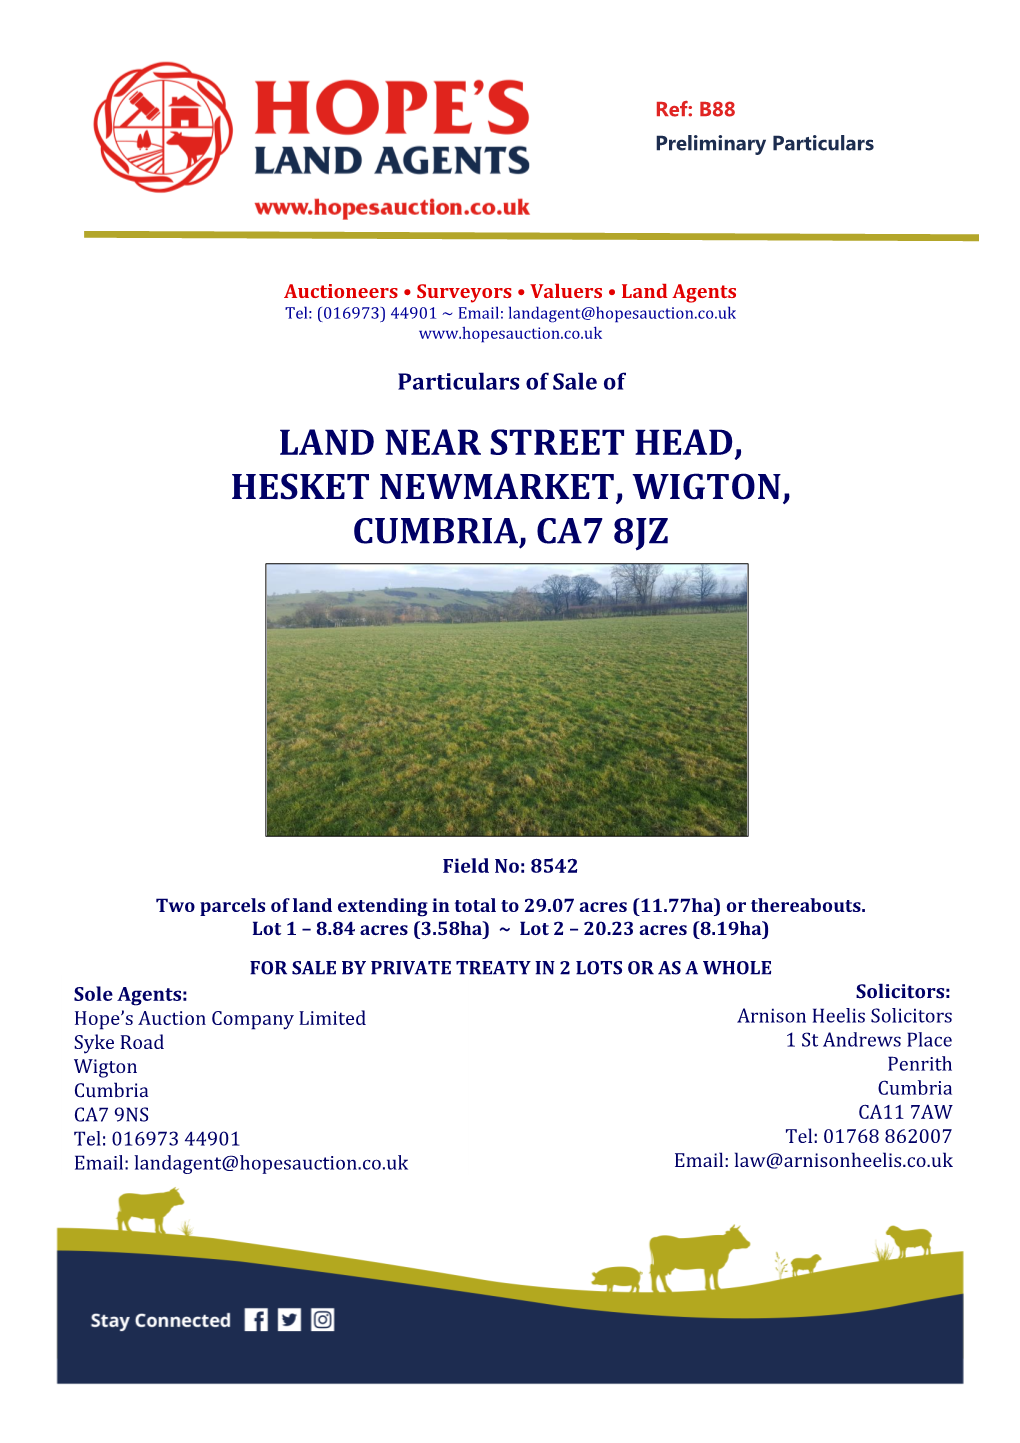 Land Near Street Head, Hesket Newmarket, Wigton, Cumbria, Ca7 8Jz